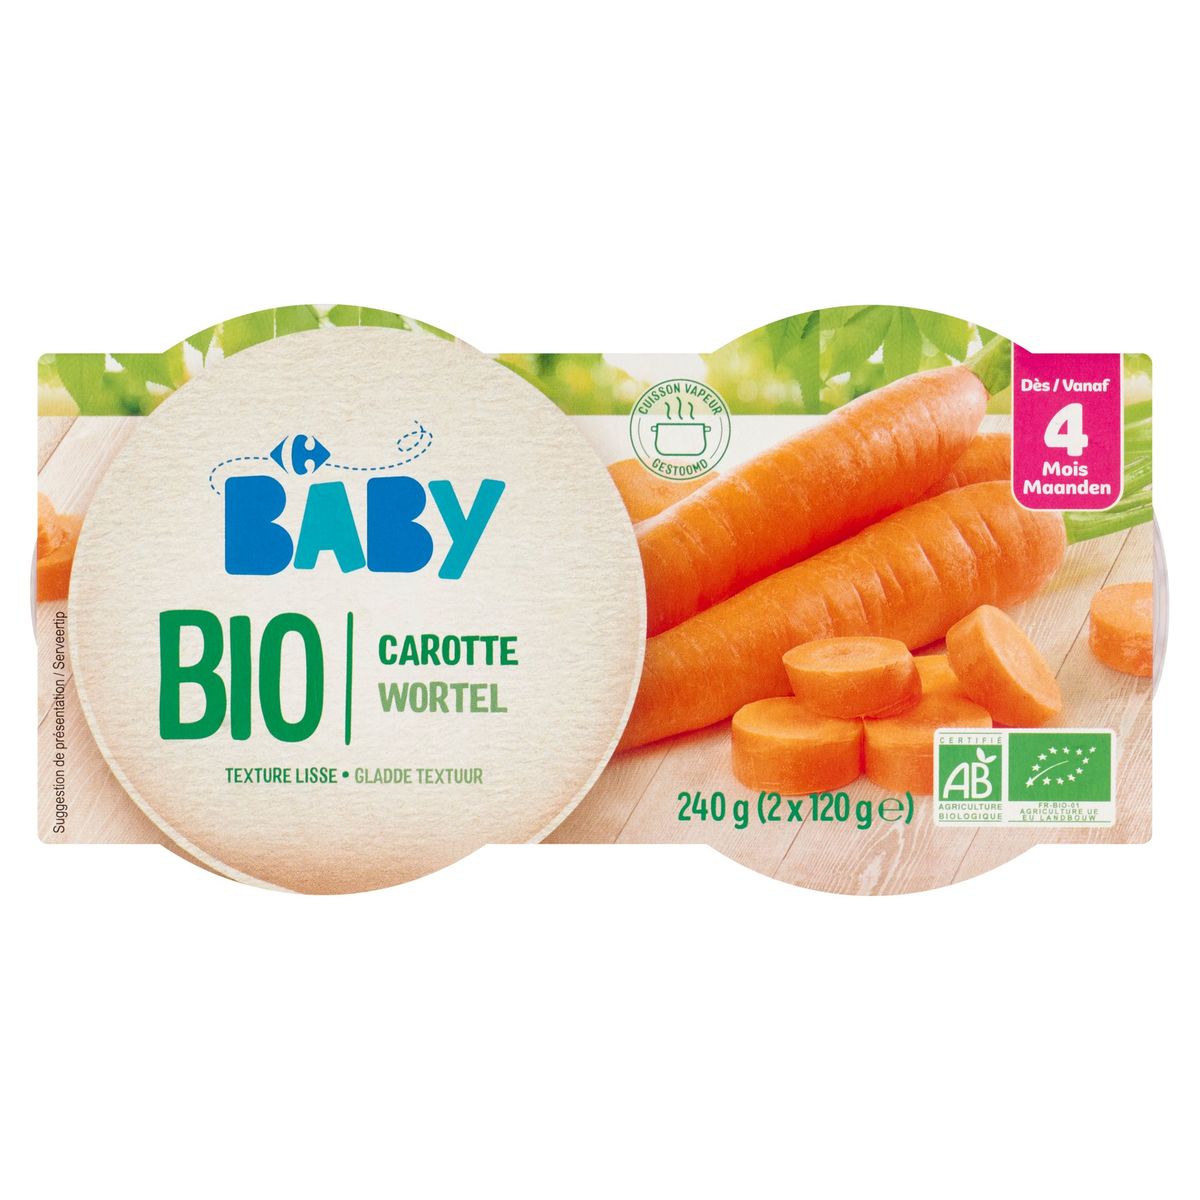 Carrefour Baby Bio Carotte dès 4 Mois 2 x 120 g